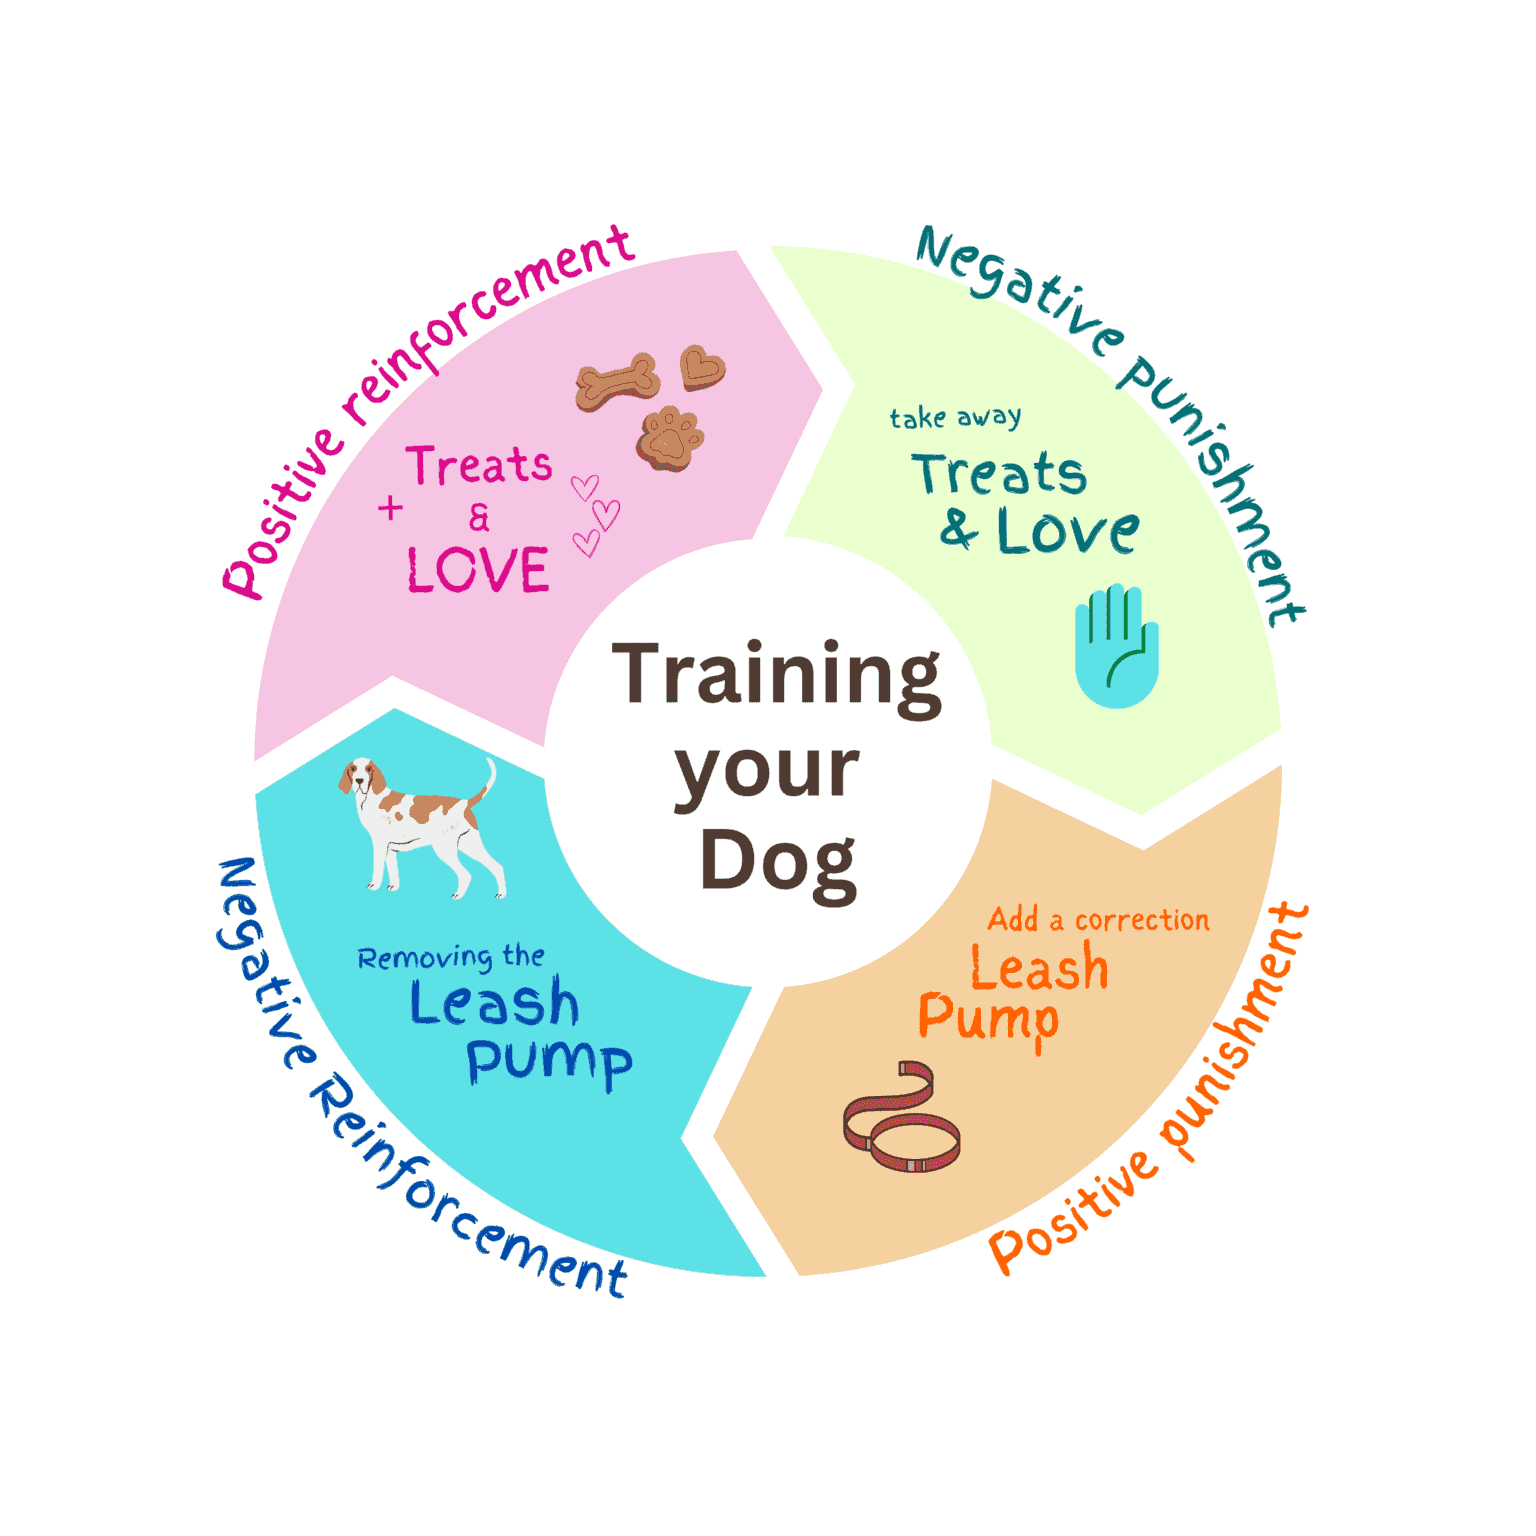 Dog training command structure